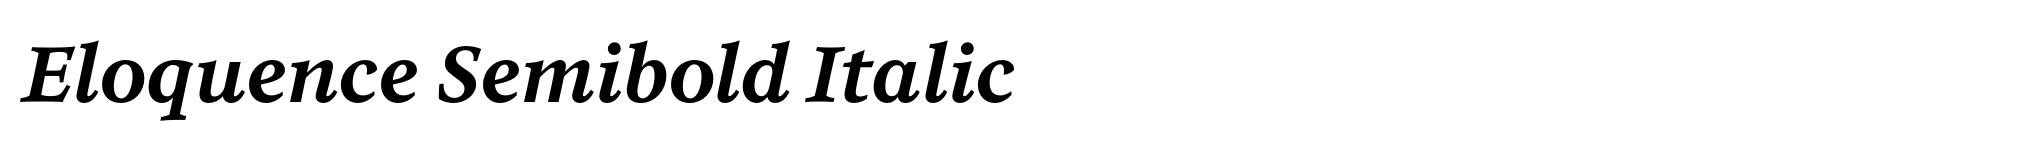 Eloquence Semibold Italic image